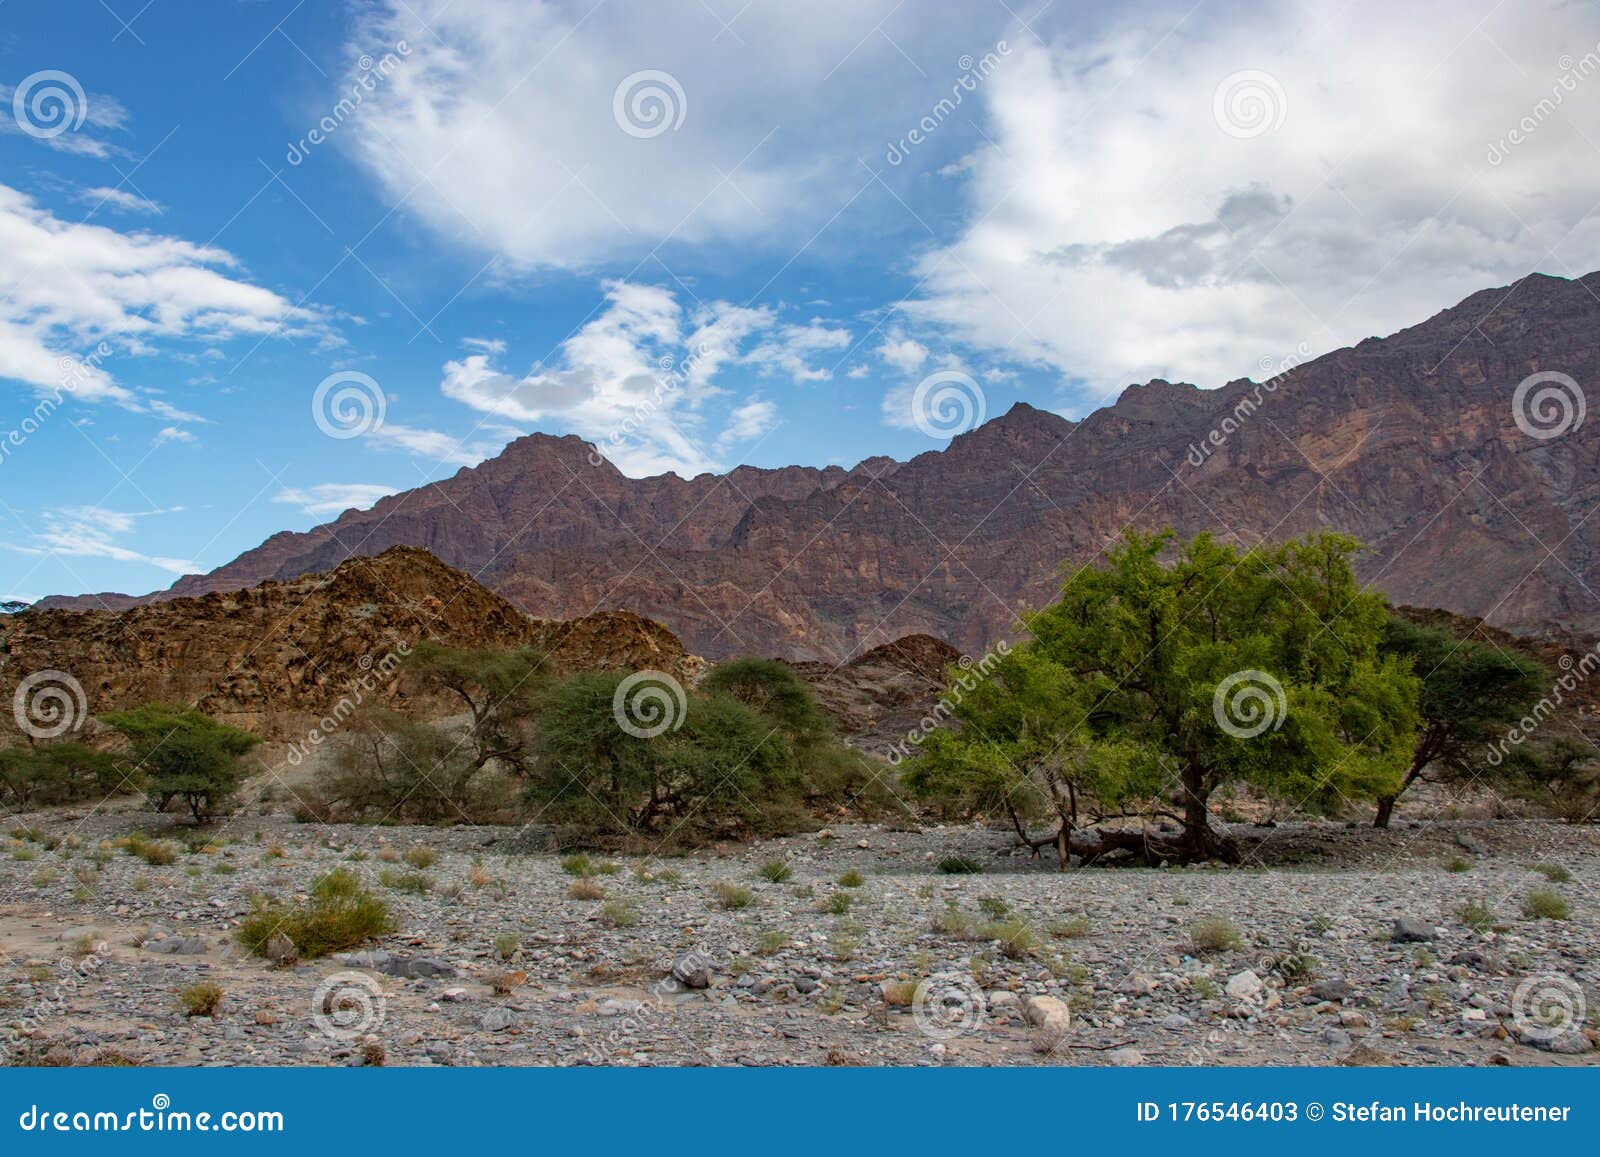 mountain and valley view along wadi sahtan road and snake canyon in al hajir mountains between nizwa and mascat in oman